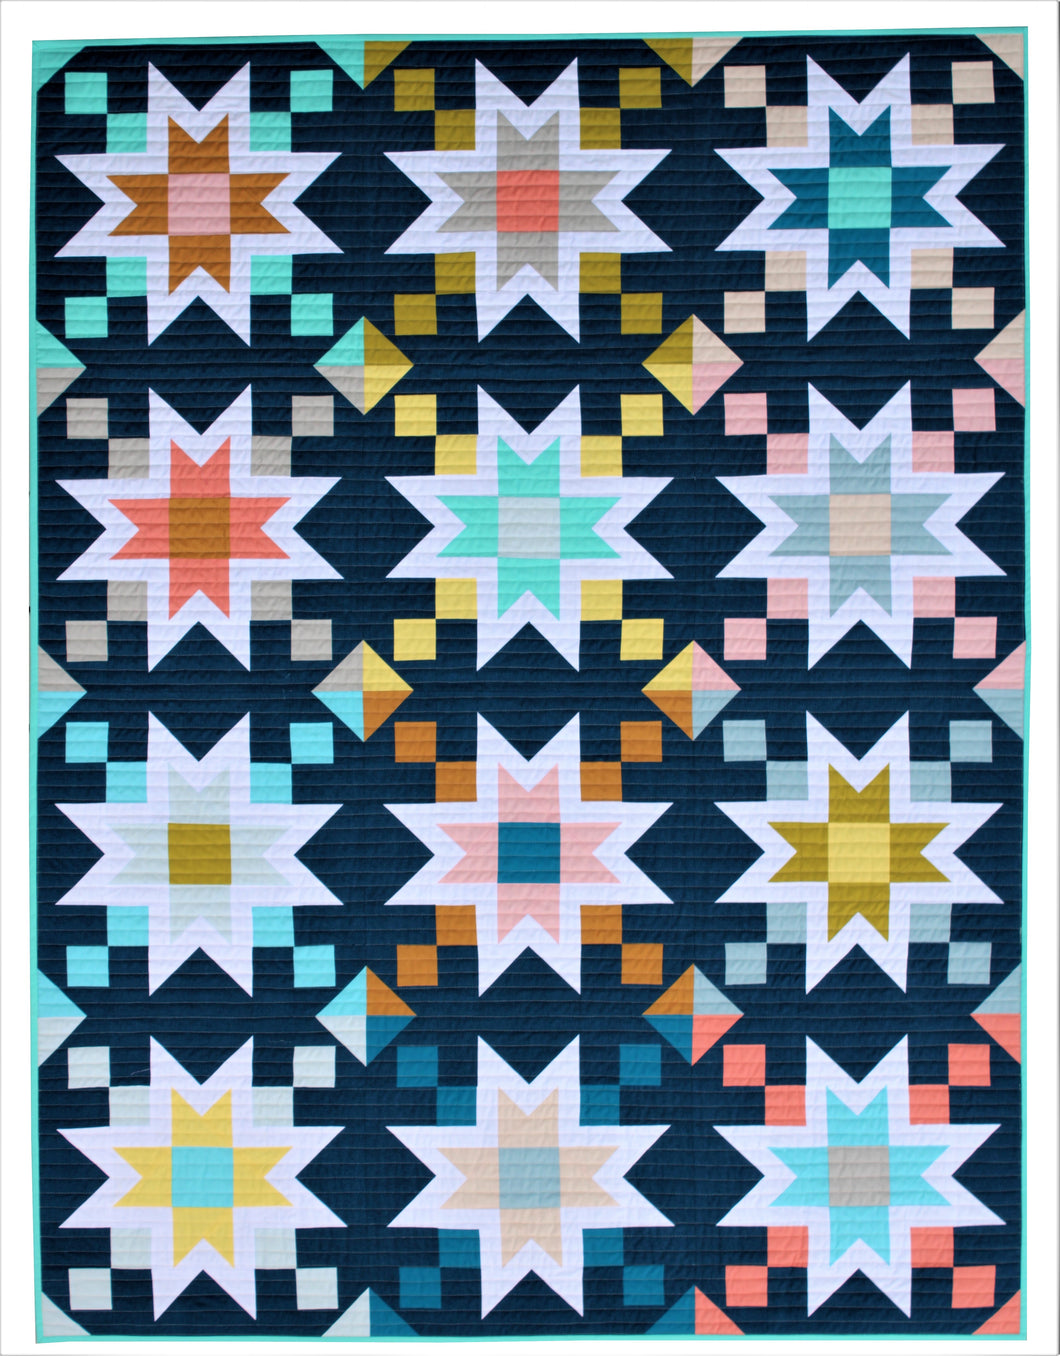 MILKY WAY _ digital quilt pattern